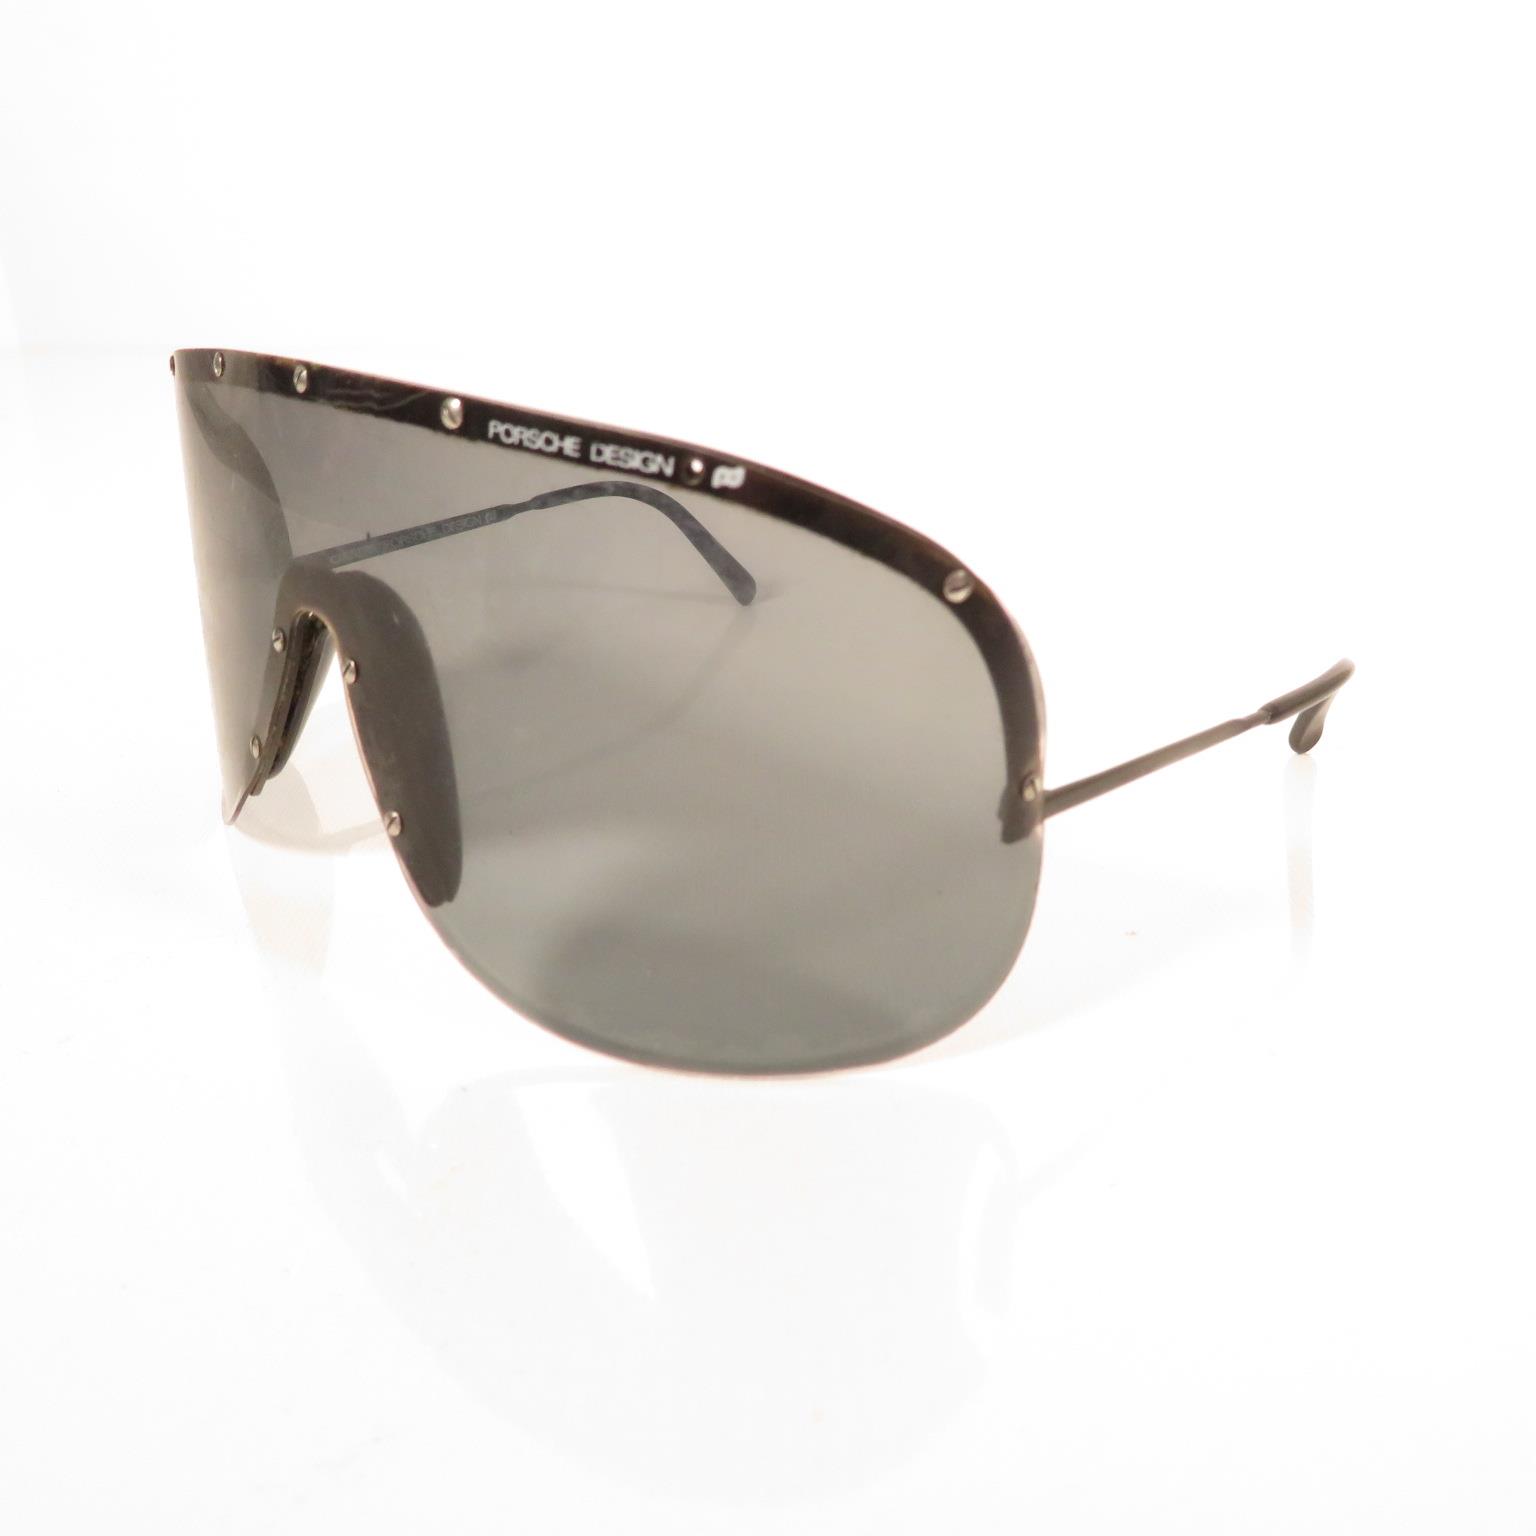 Pair of Porsche Folding Sunglasses, Per Sol folding Sunglasses, Oakley sunglasses and Porsche design - Image 12 of 17